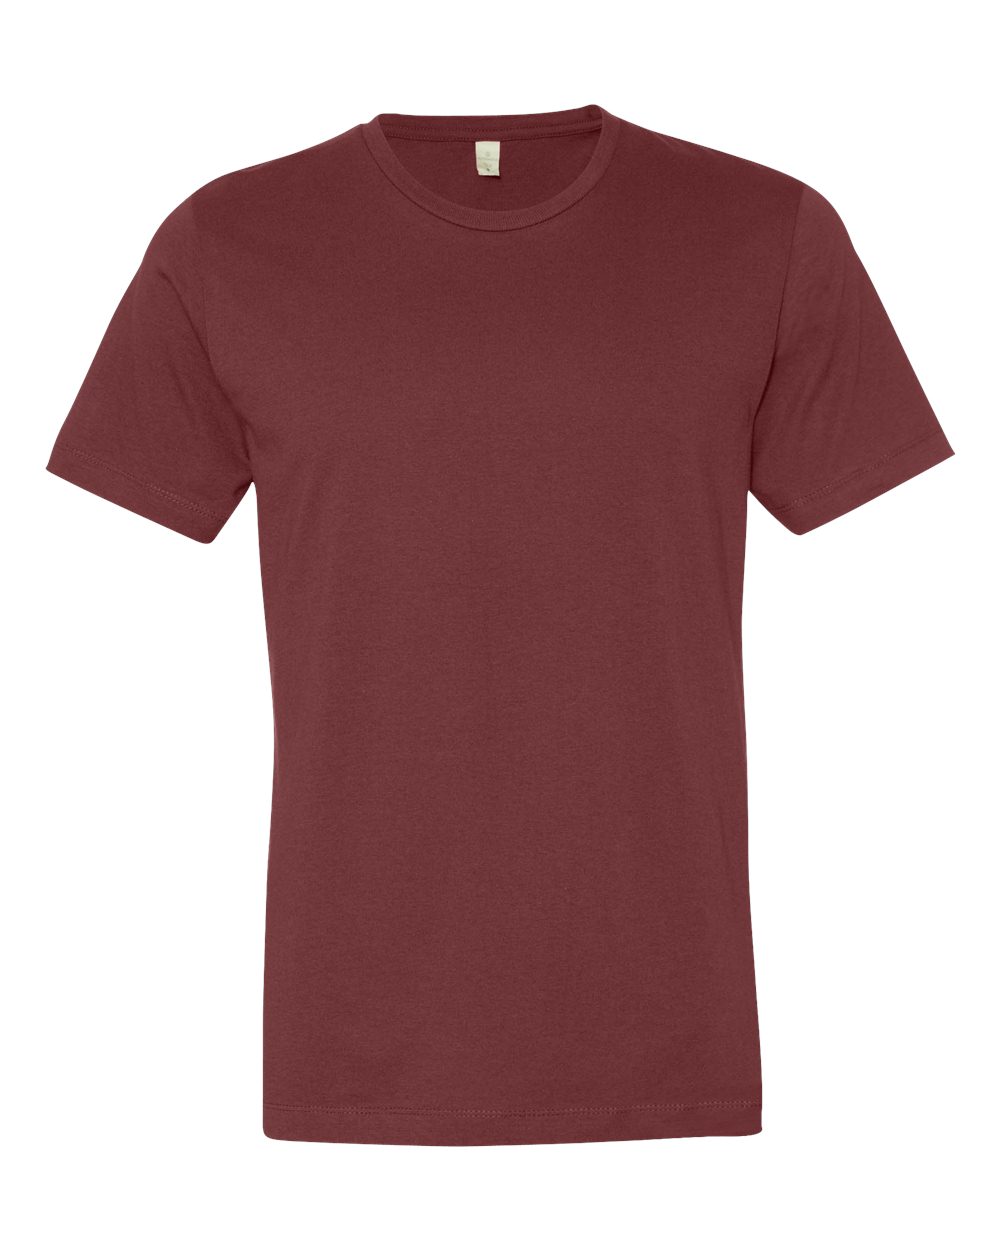 Download Alternative 1070 Short Sleeve T-Shirt $5.82 - Men's T-Shirts